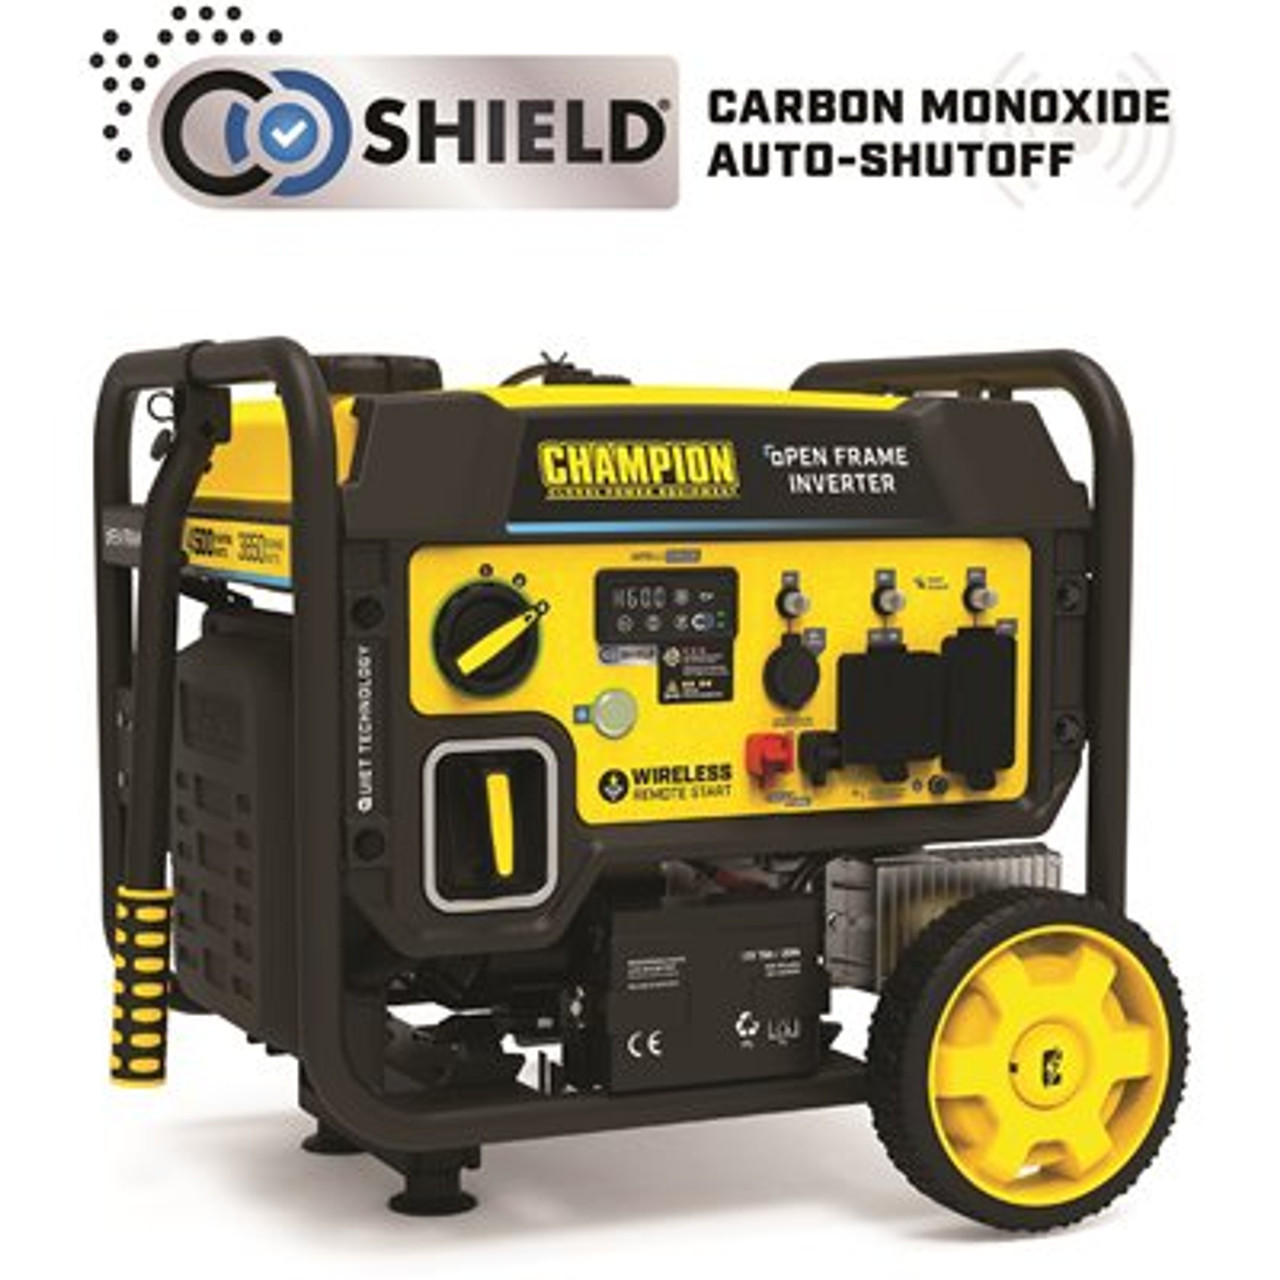 Champion Power Equipment 4500-Watt Remote Start Gasoline Powered Open Frame Inverter Generator with CO Shield